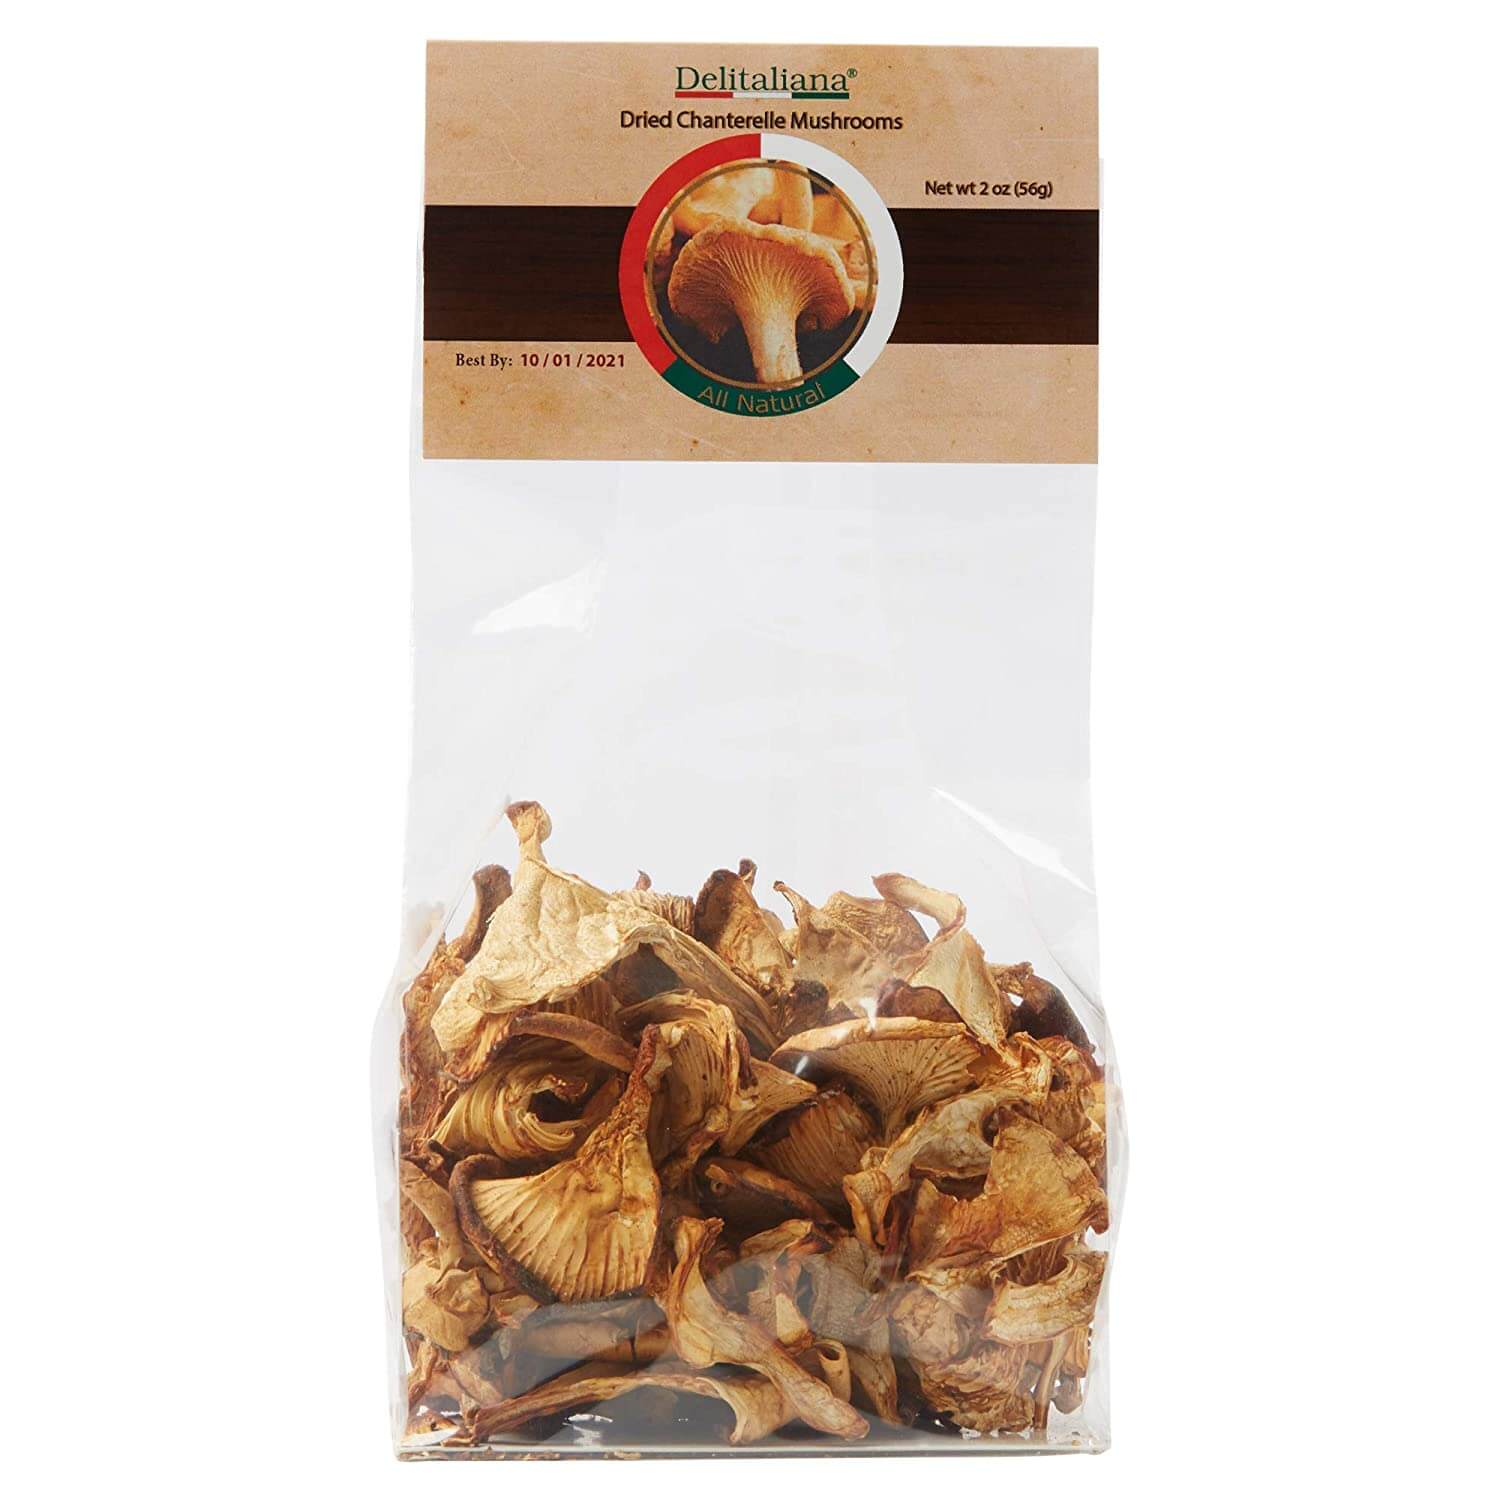 Delitaliana Dried Chanterelle Mushrooms